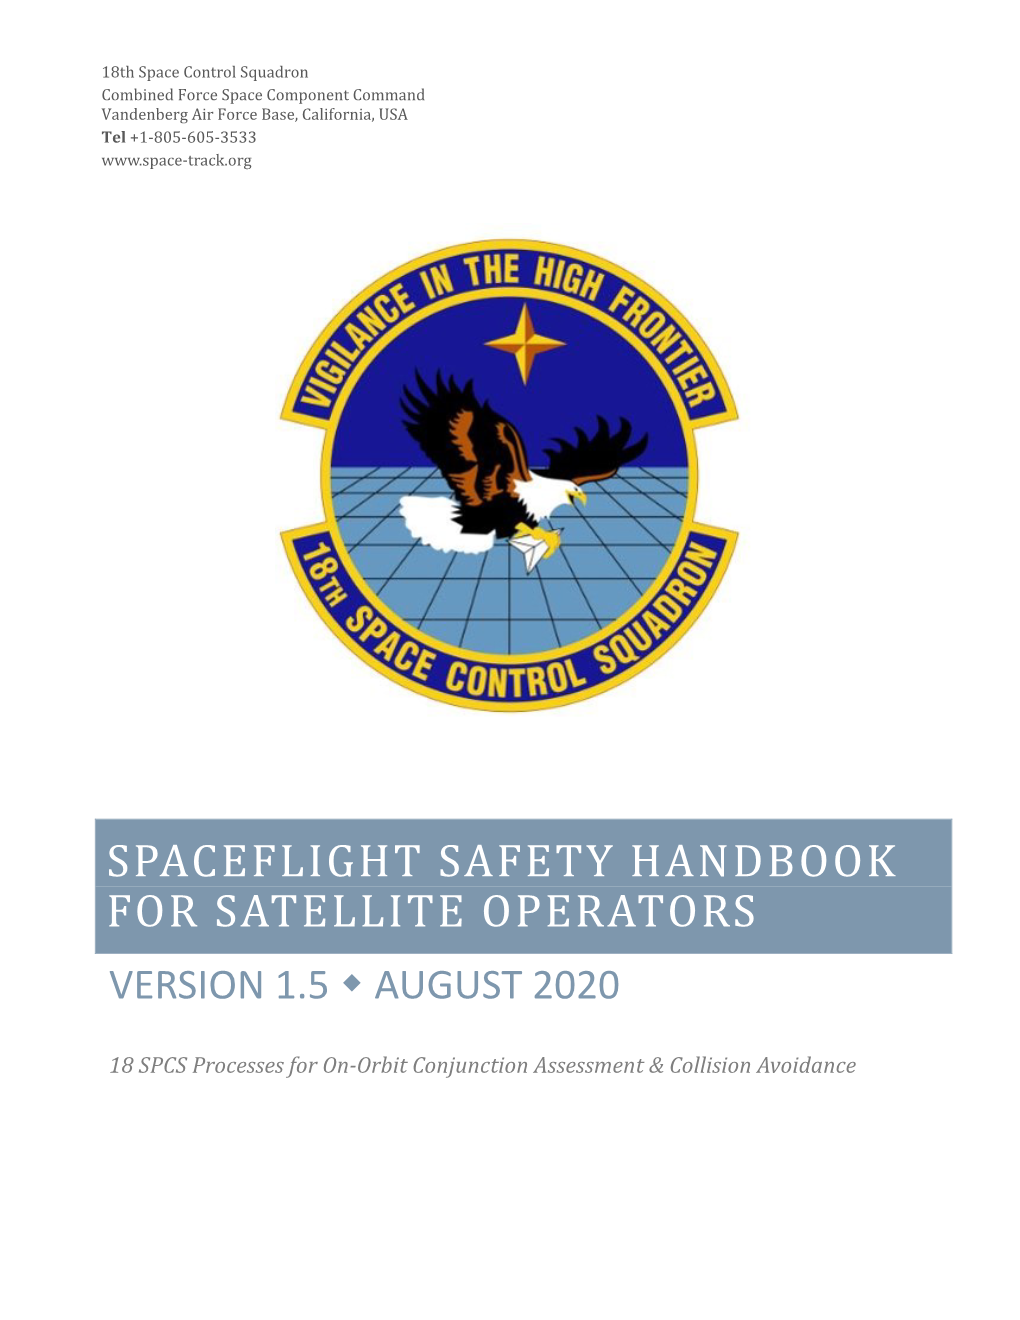 Spaceflight Safety Handbook for Satellite Operators Version 1.5  August 2020